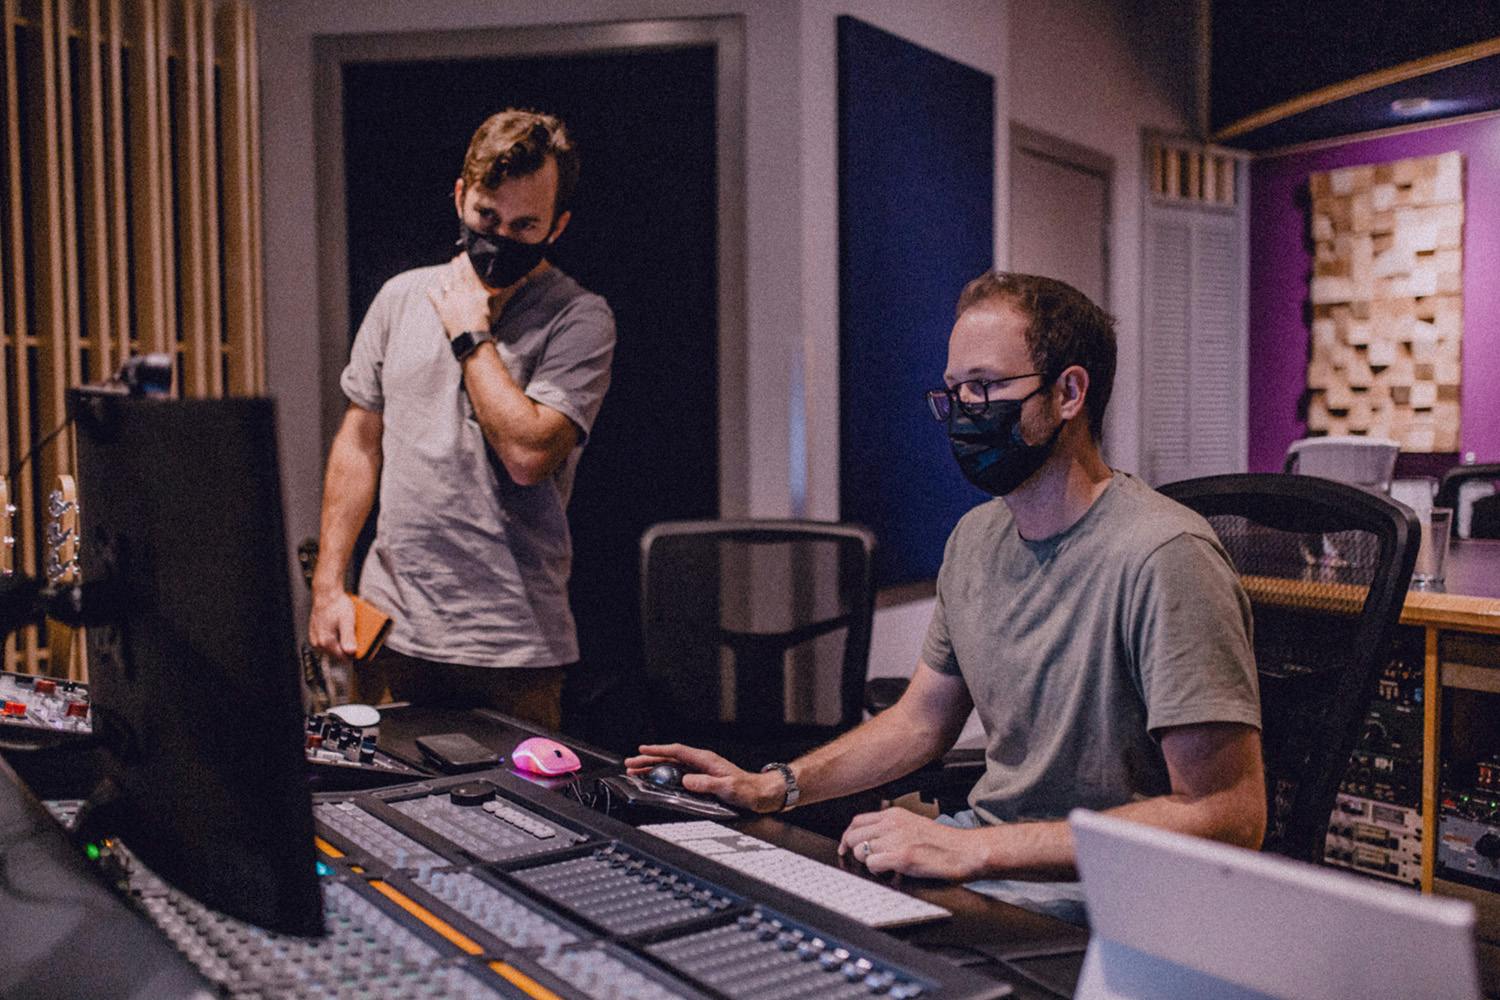 Music Producers Bradley J Simons and Brandon Unis working on a production at Edmonton Recording studio Velveteen Music